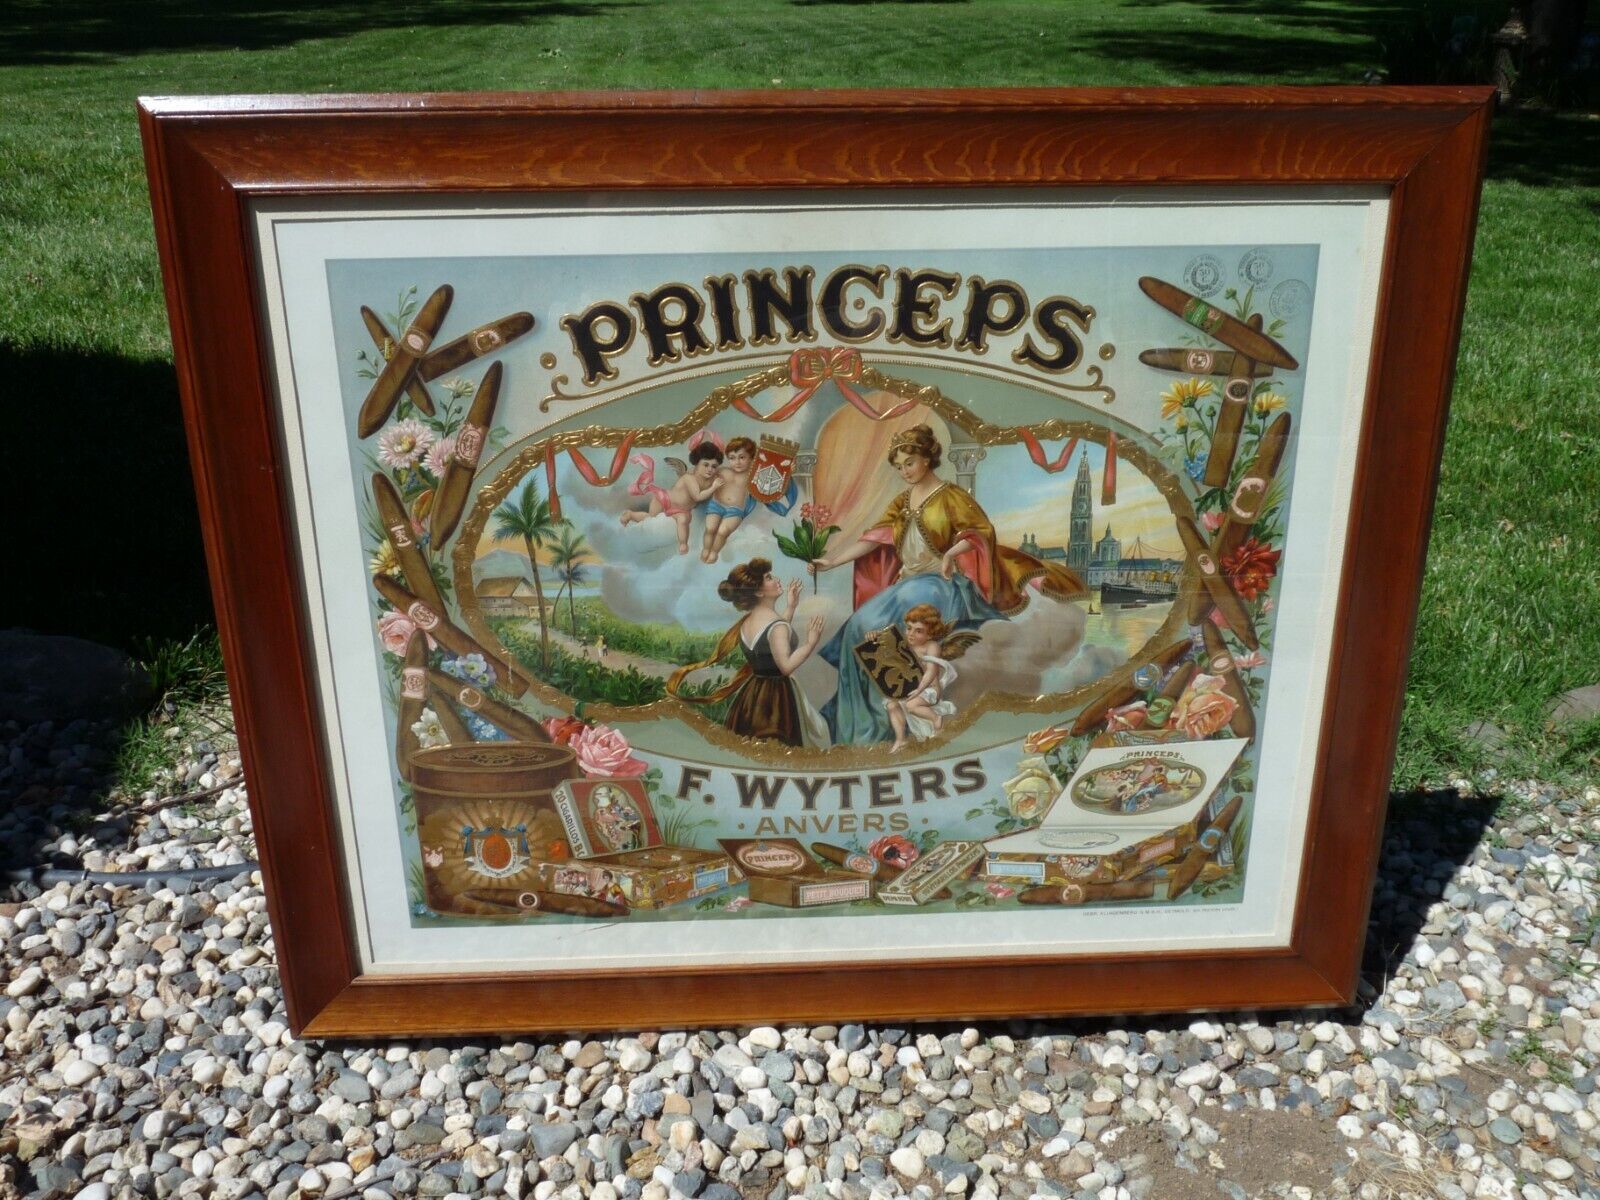 Antique Original princeps cigars f. wyters anvers advertisement circa 1890 wow